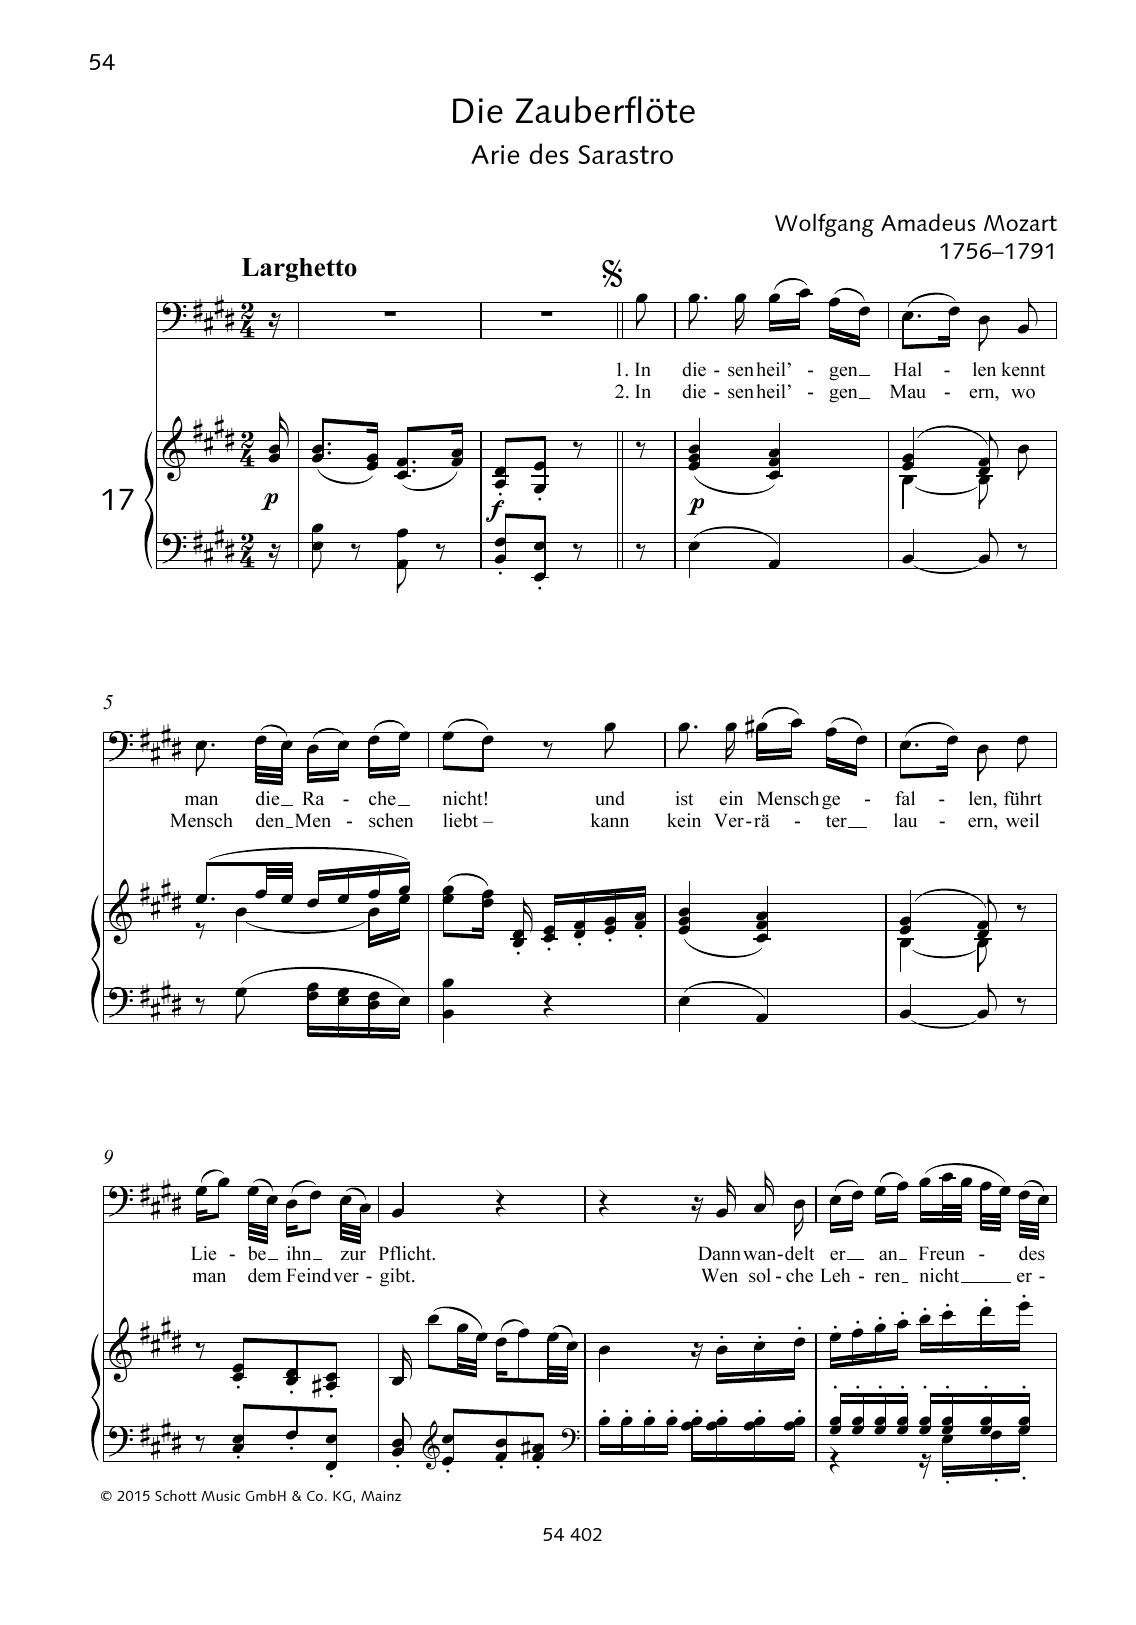 Wolfgang Amadeus Mozart In diesen heil'gen Hallen Sheet Music Notes & Chords for Piano & Vocal - Download or Print PDF